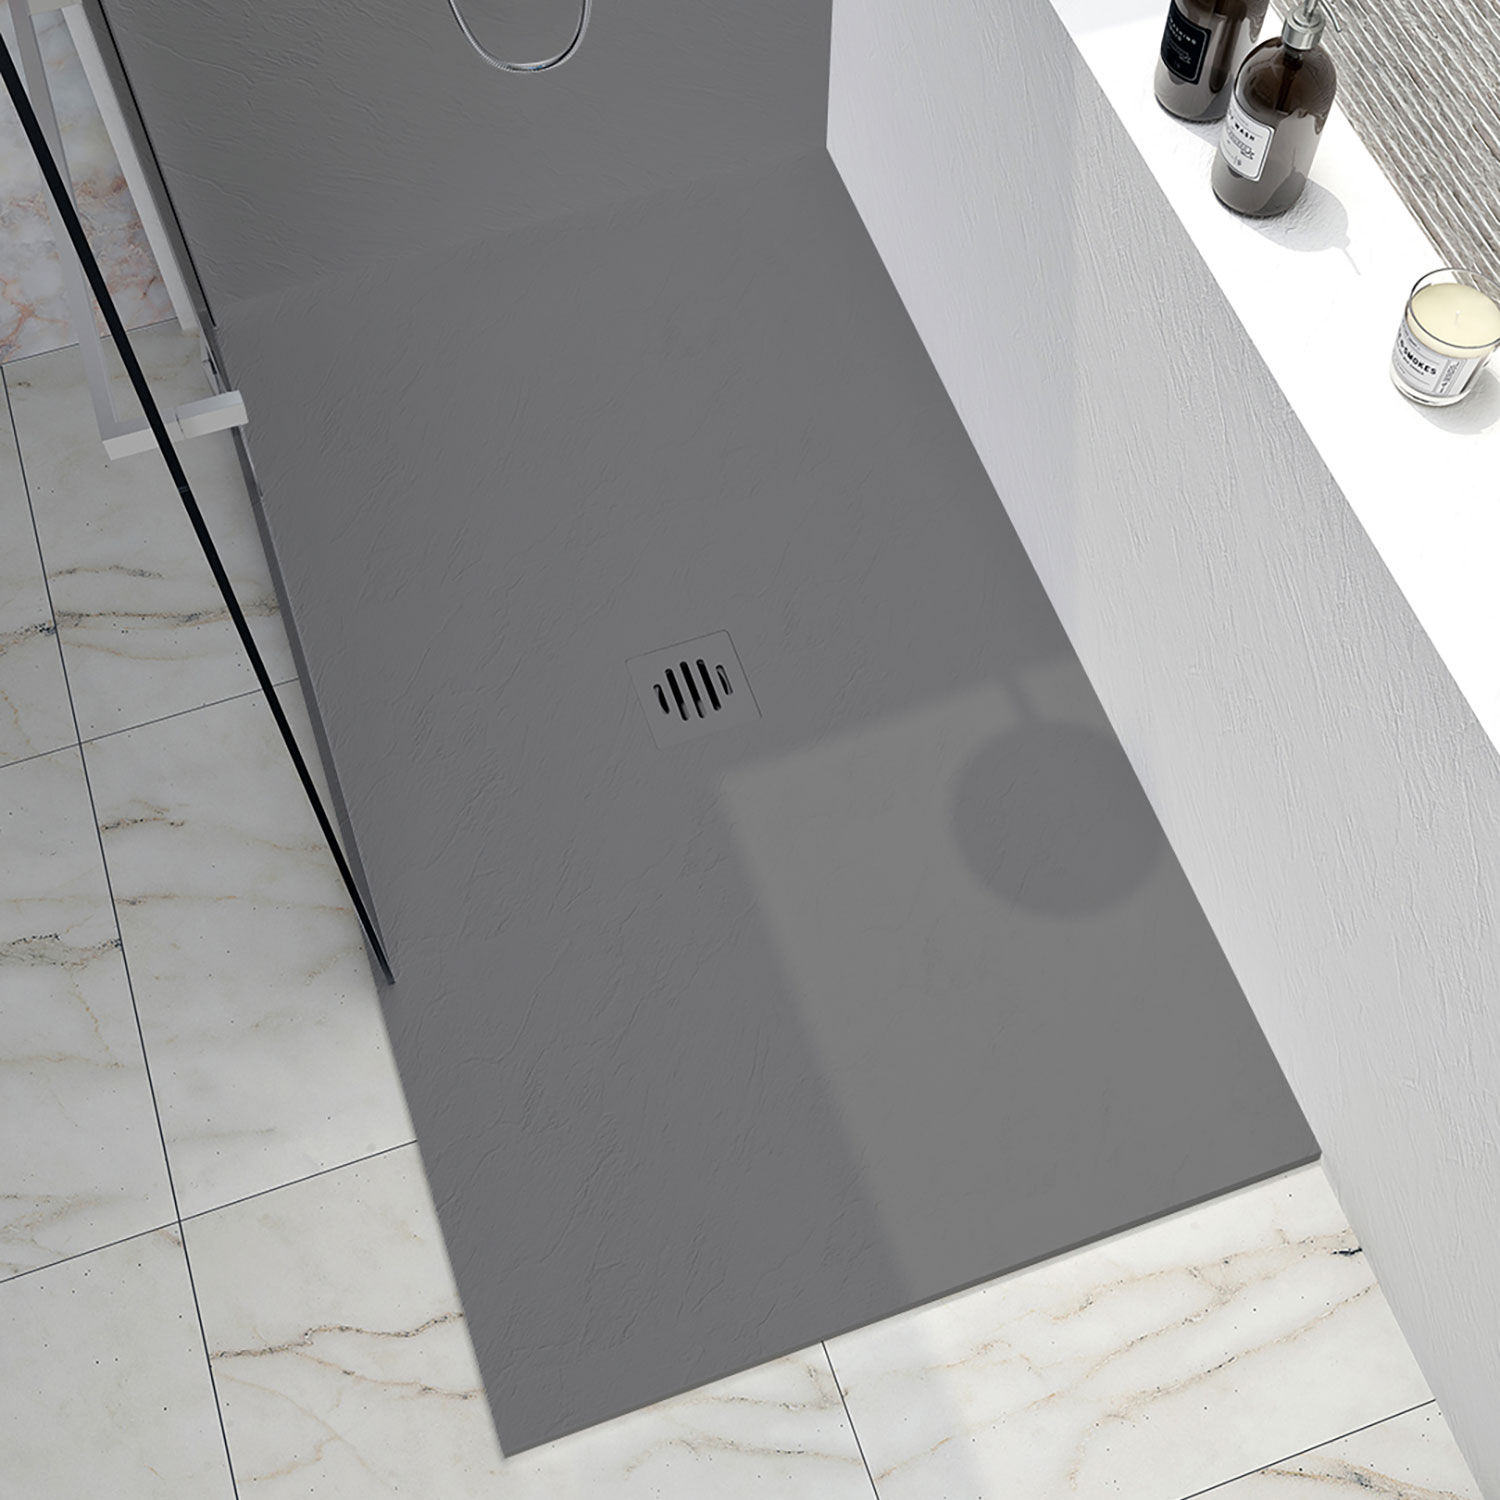 Shower base Slate 48 x 36, custom-made tile flange installation, in concrete grey